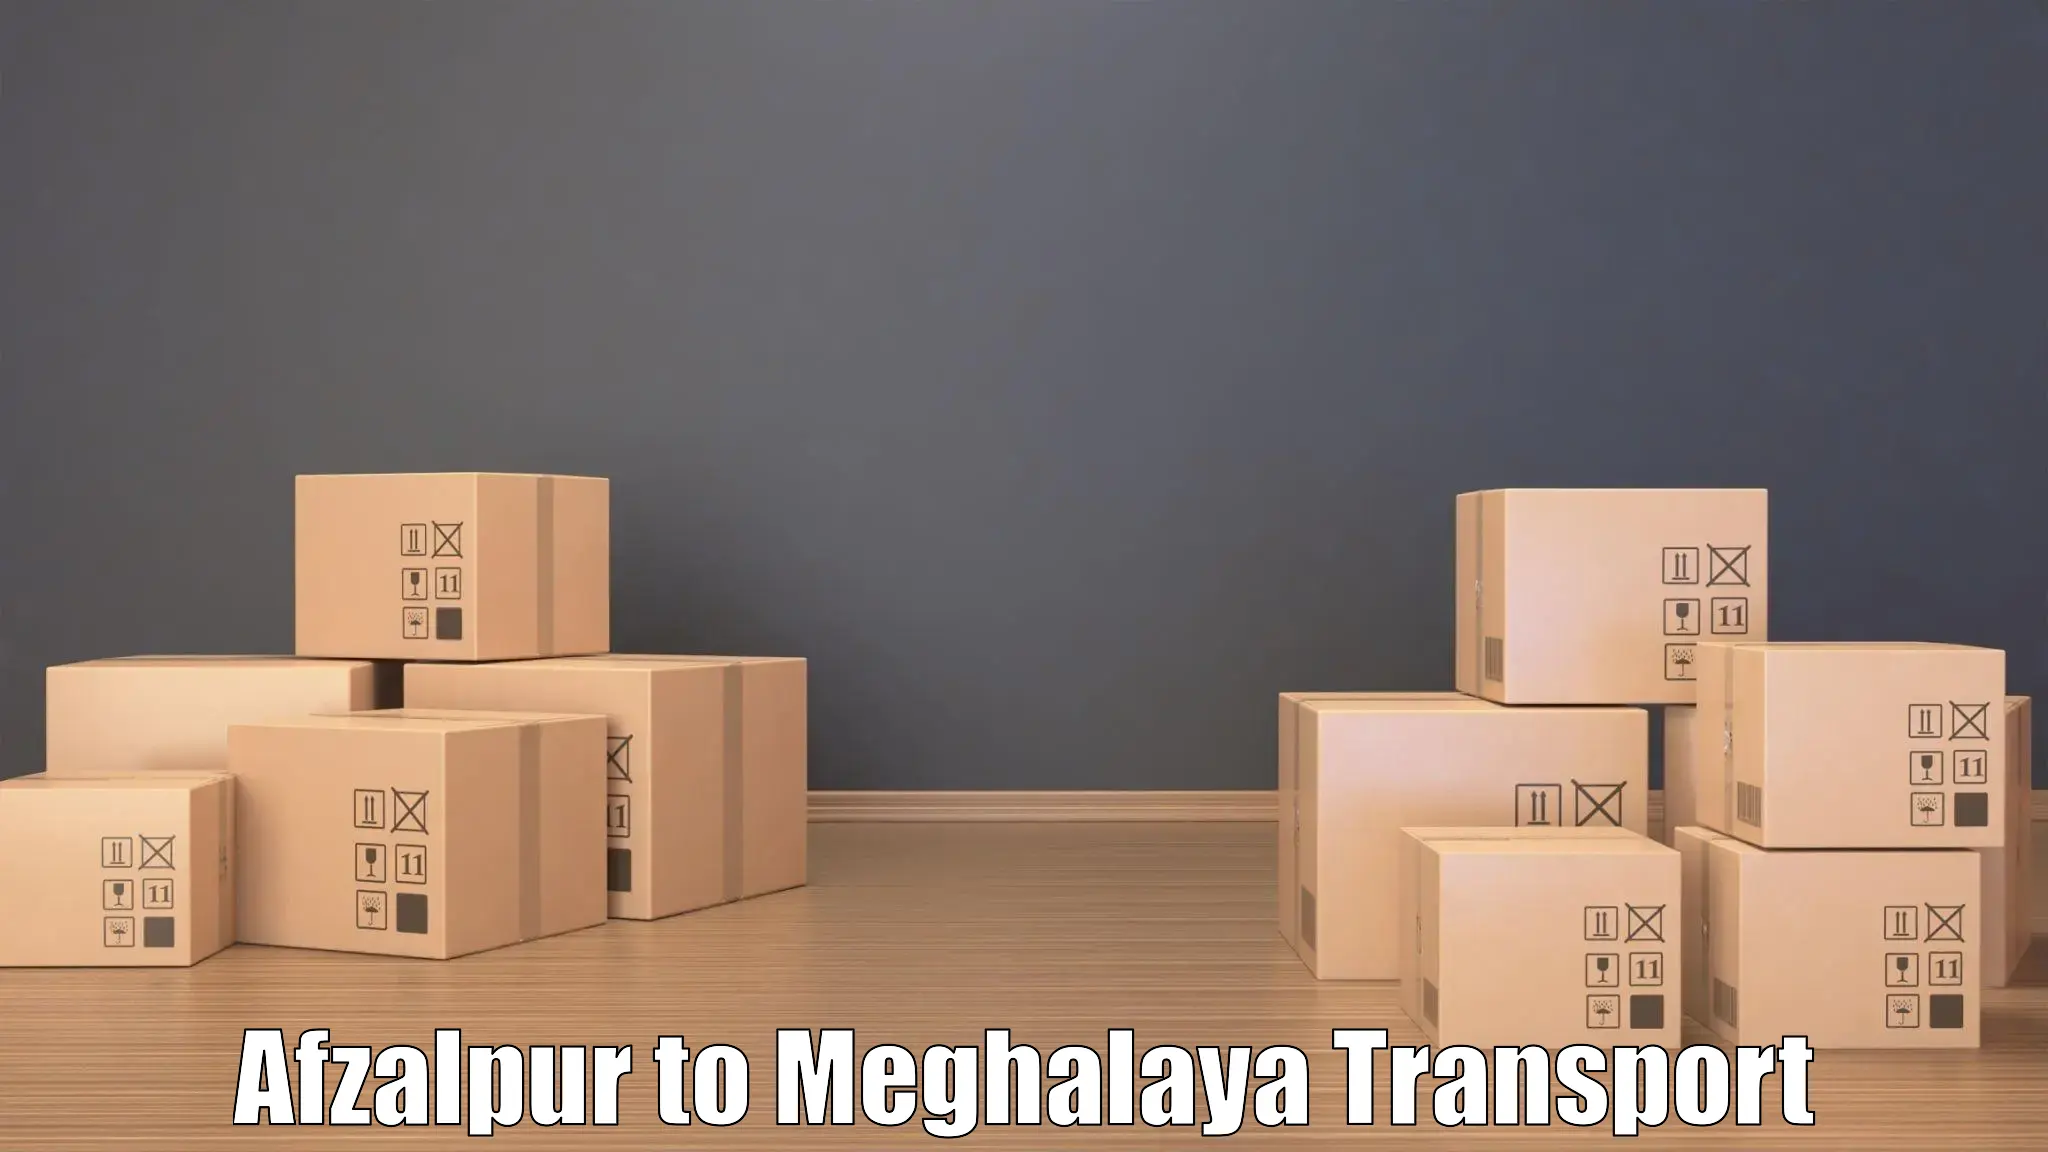 Nearest transport service Afzalpur to Meghalaya